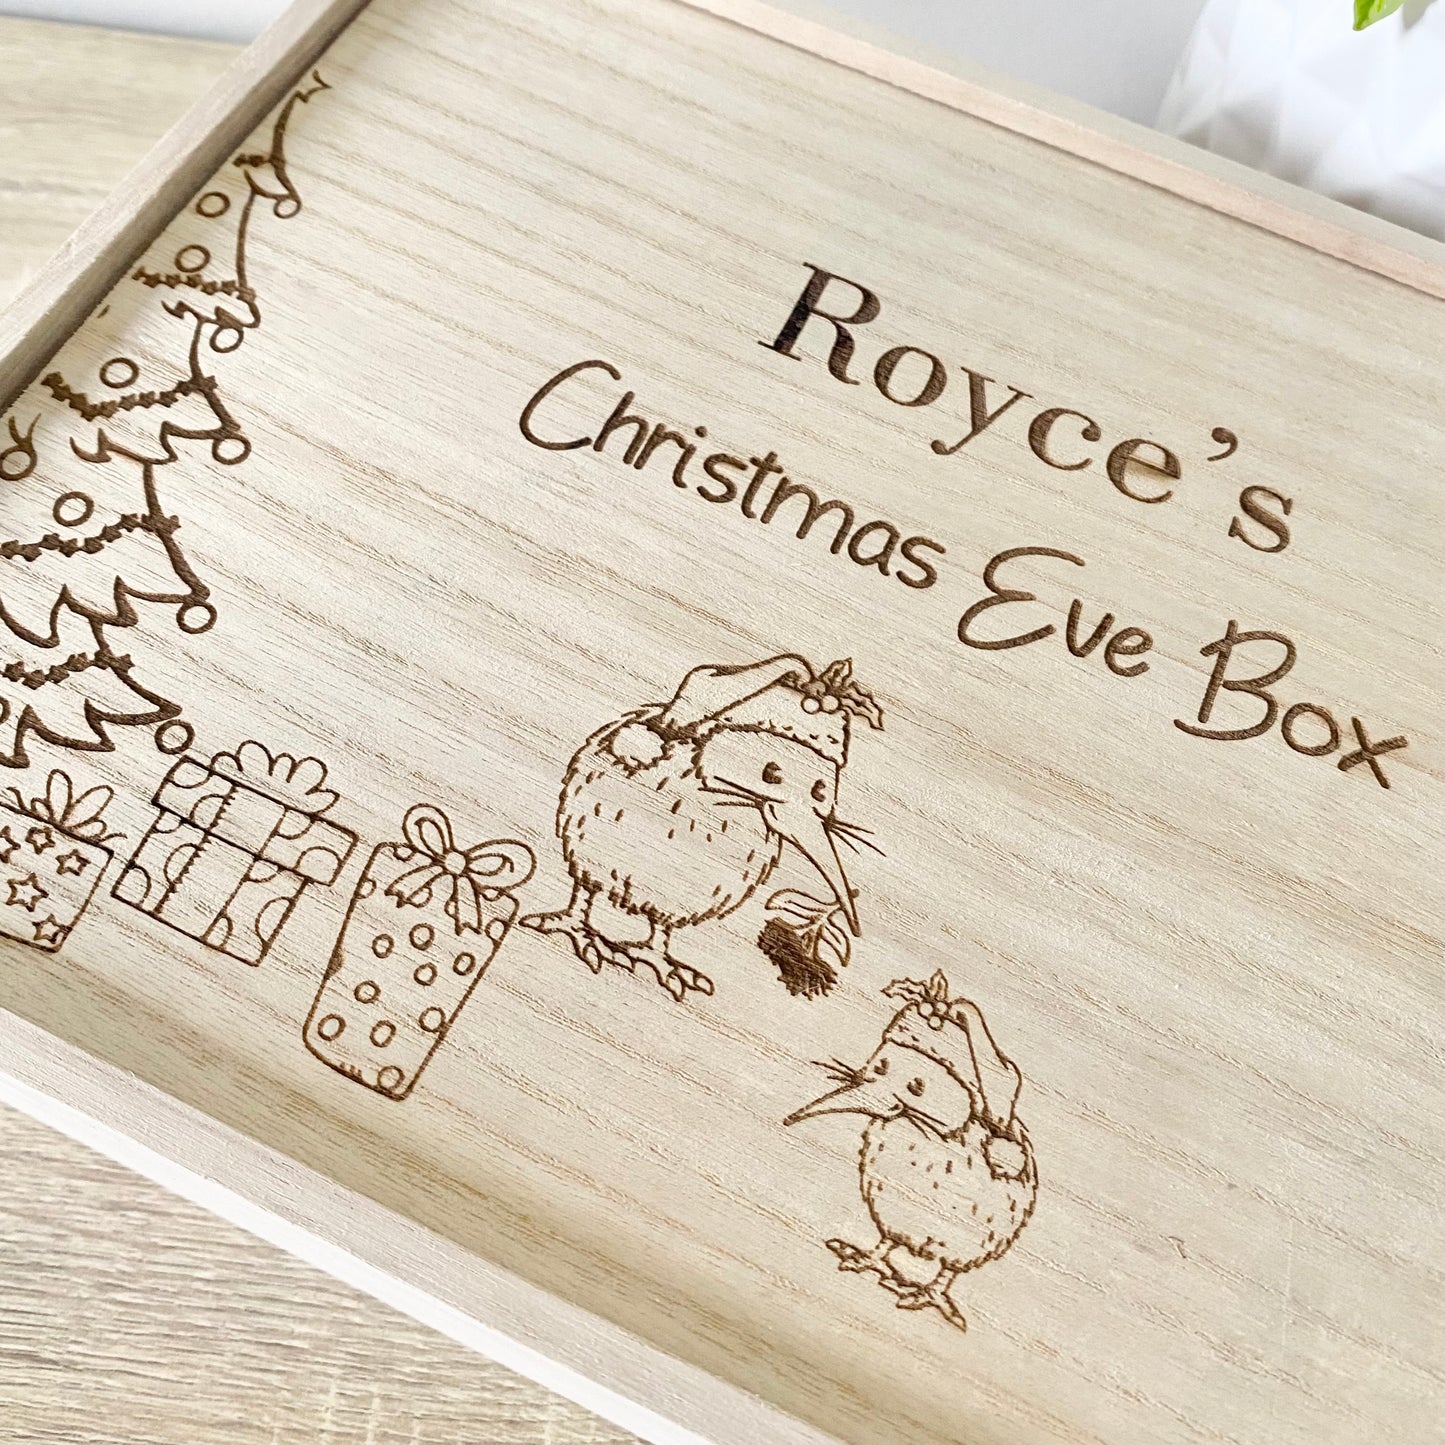 Kiwi Christmas Eve Box